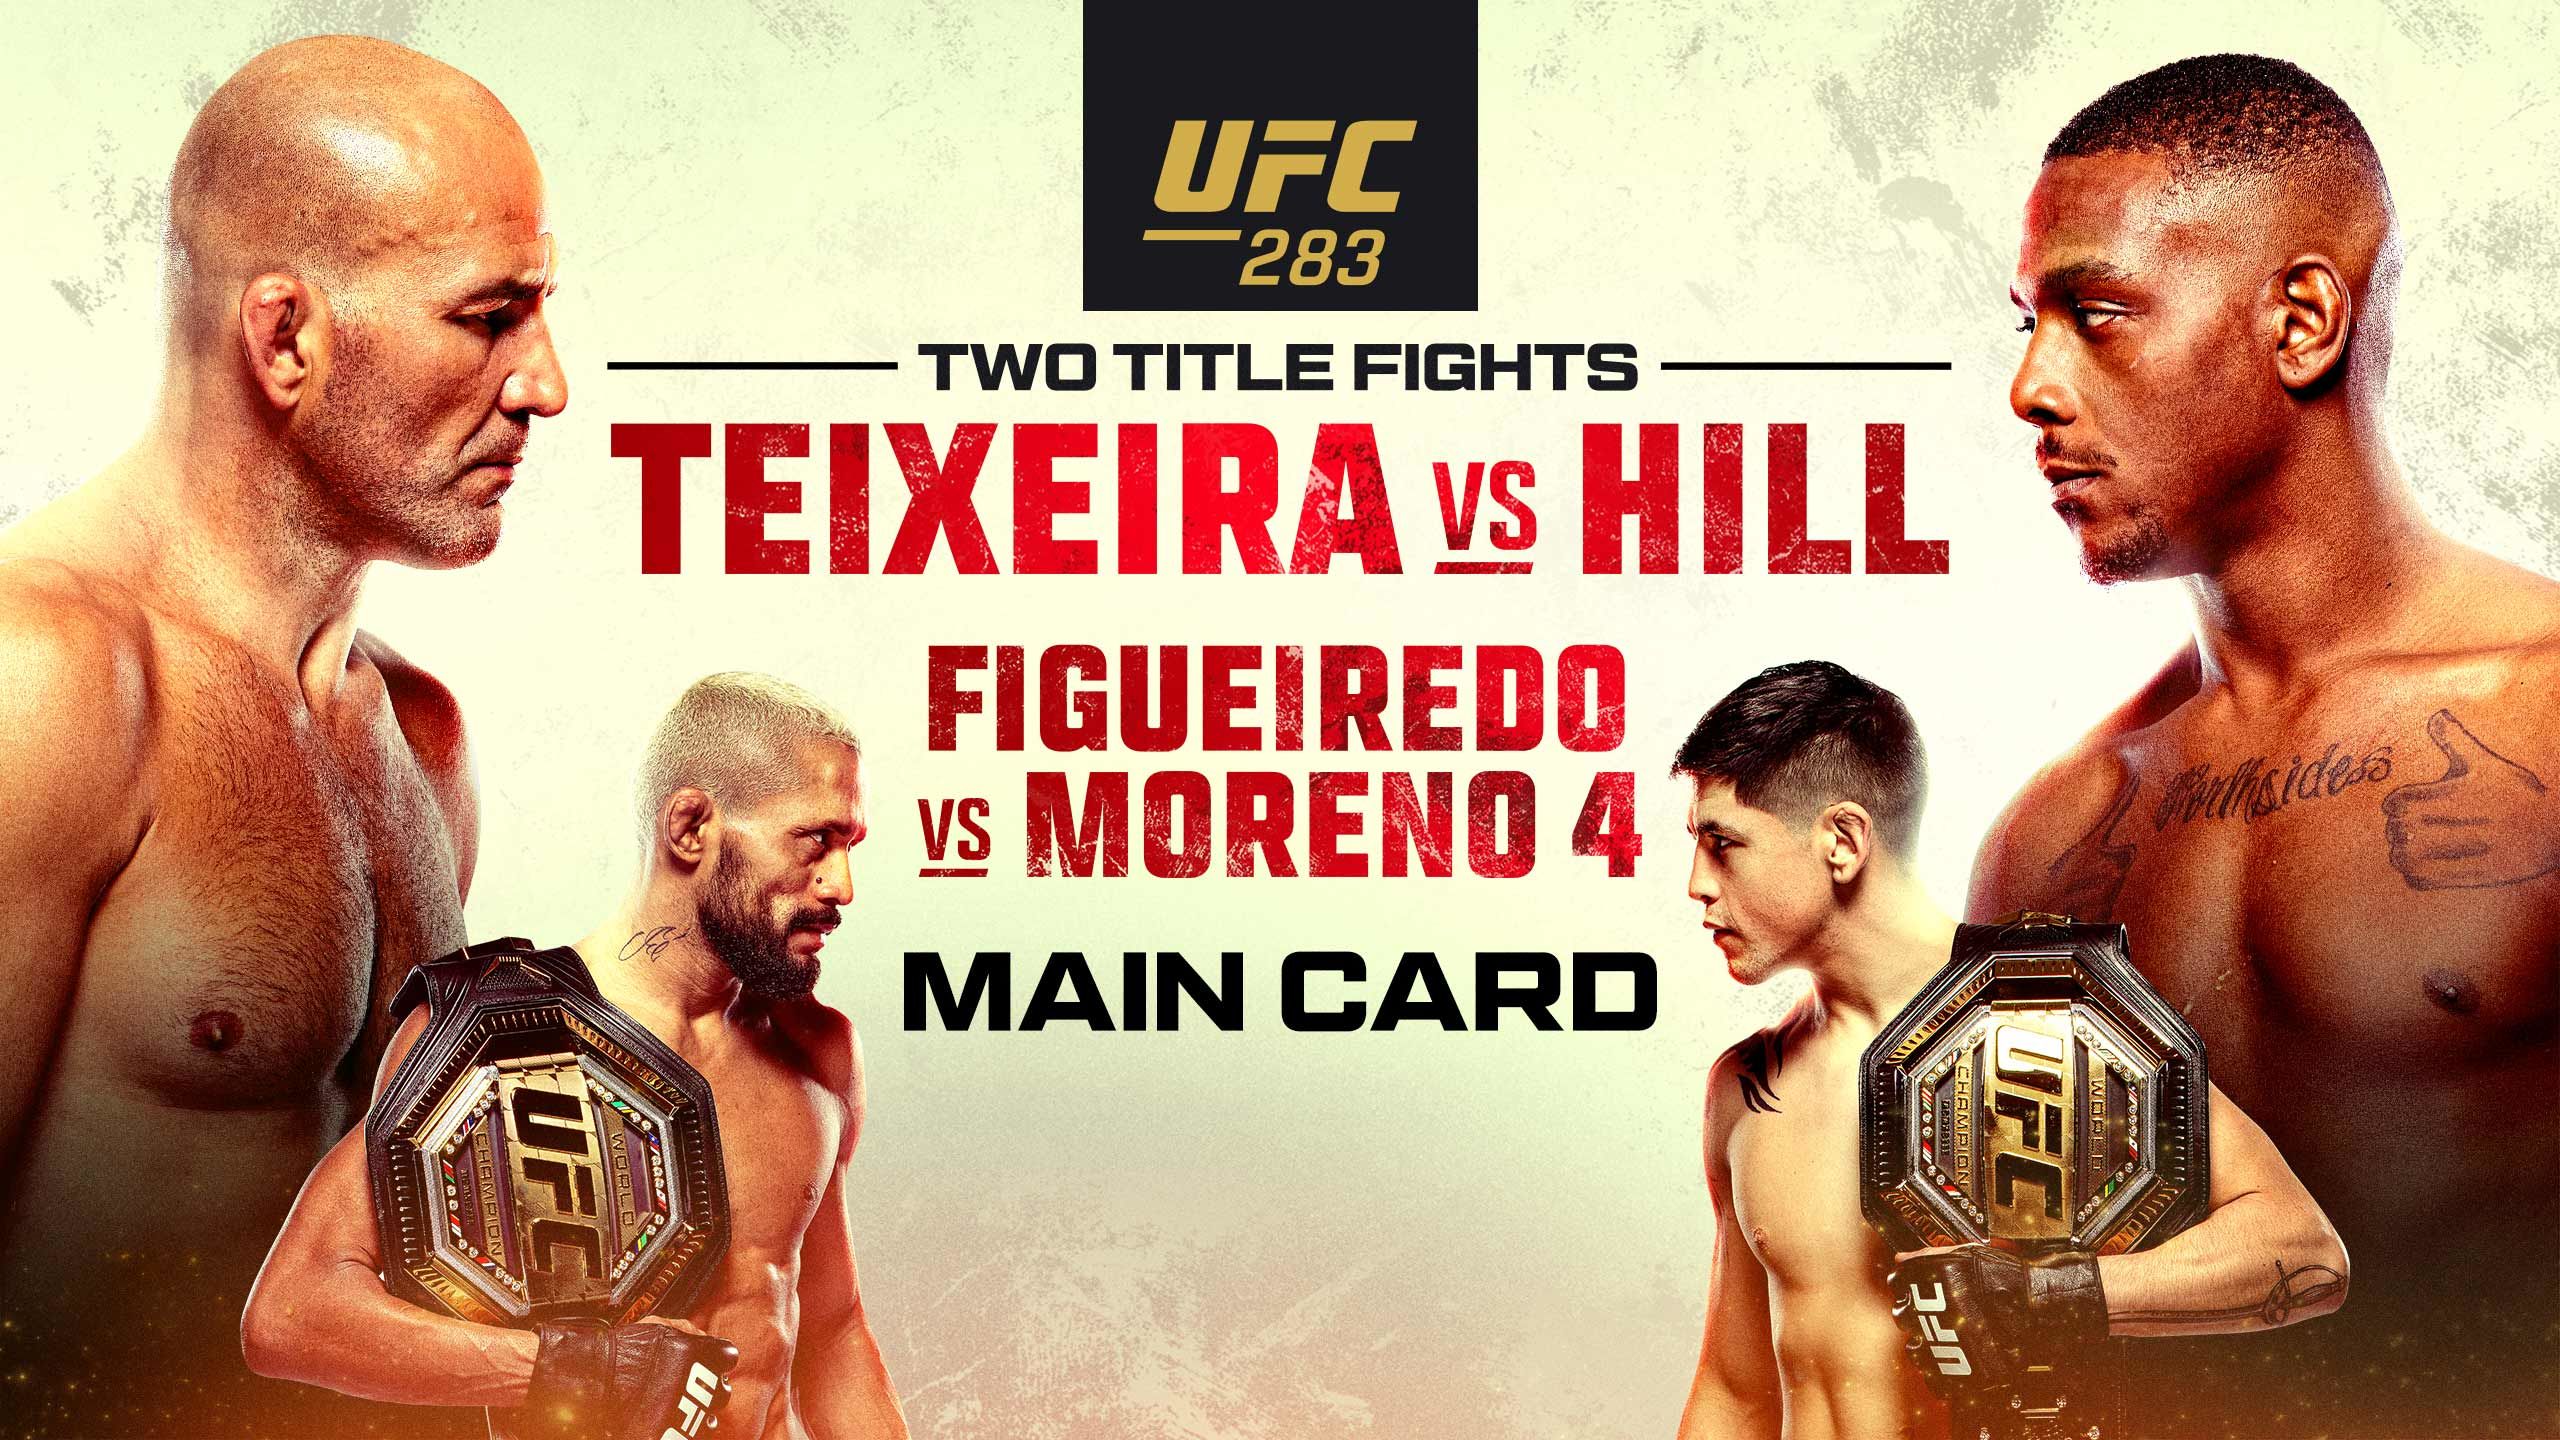 Full UFC 283 card Teixeira vs Hill